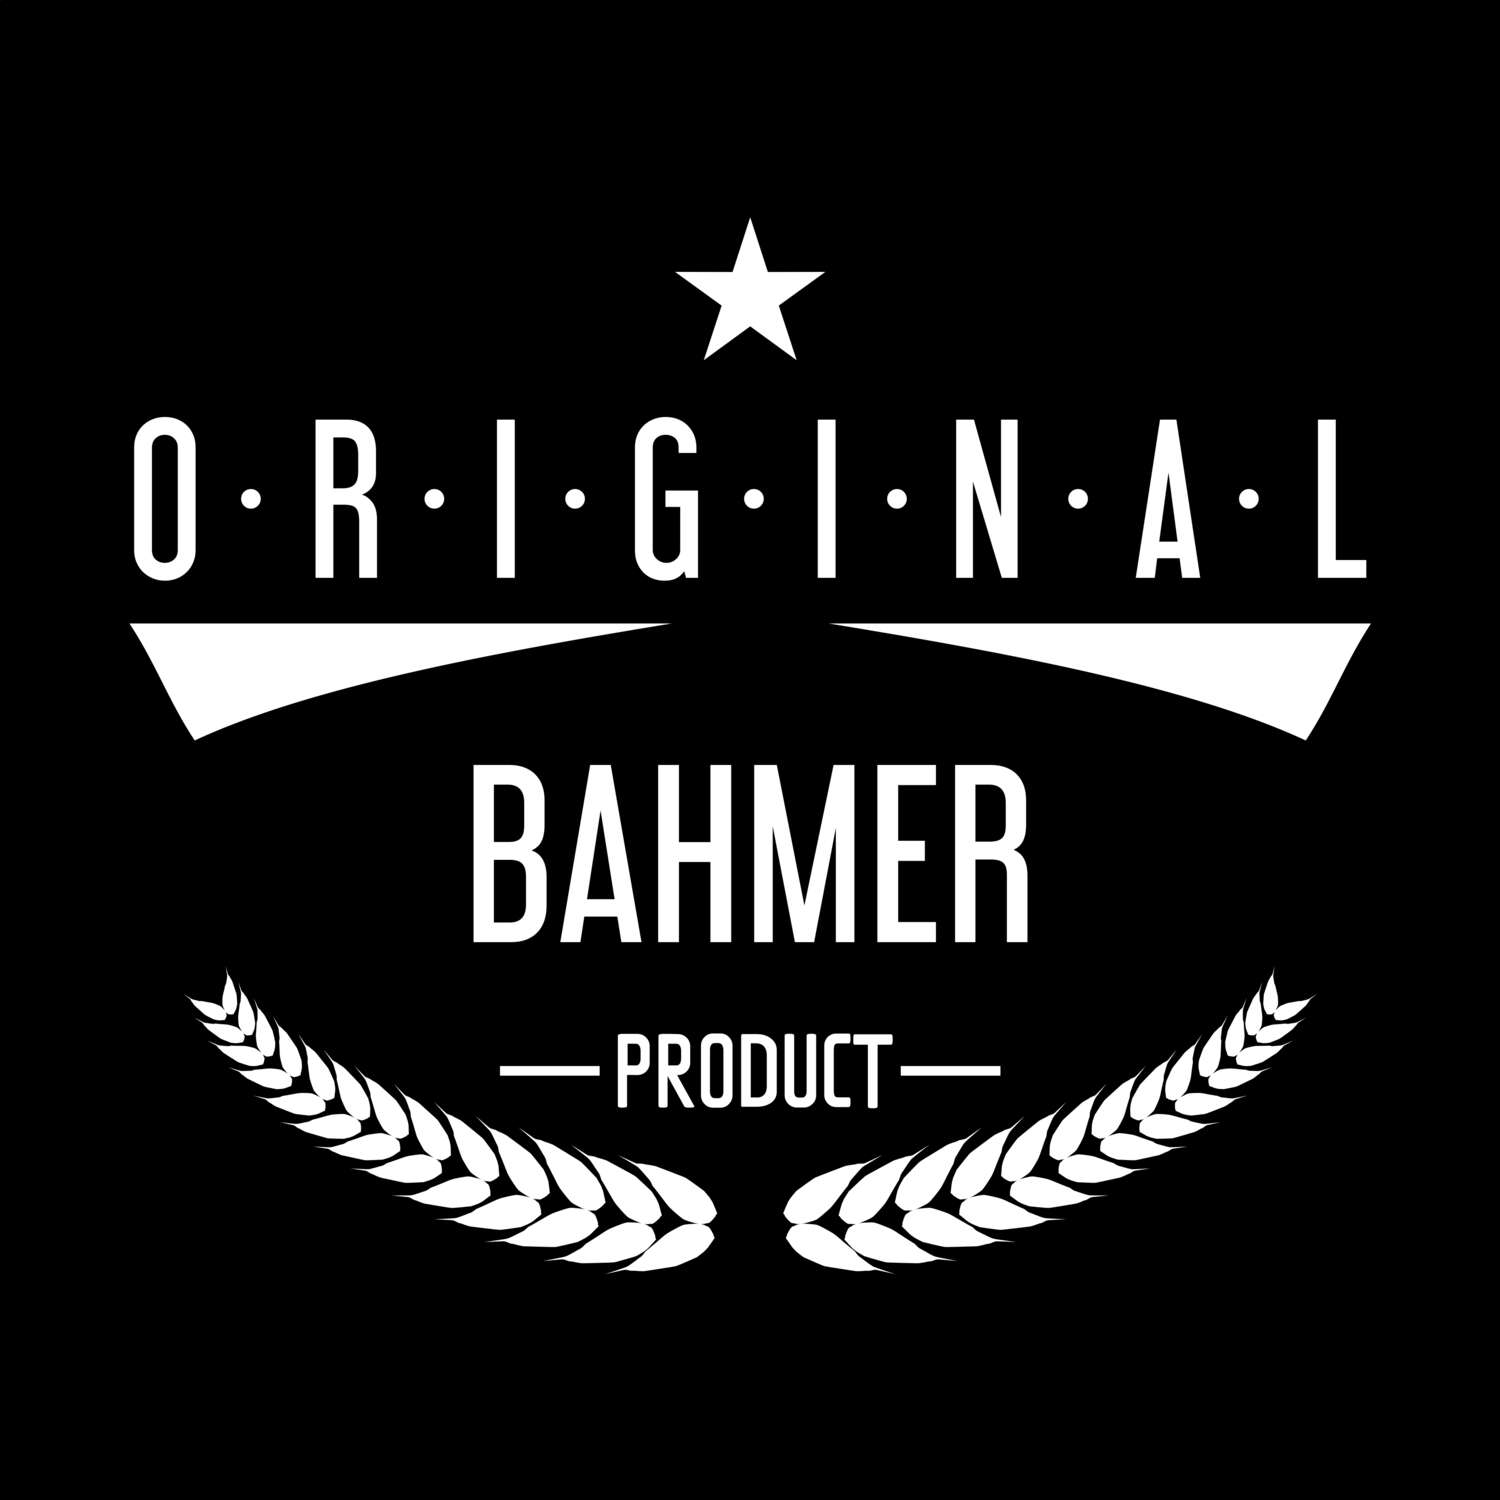 Bahmer T-Shirt »Original Product«